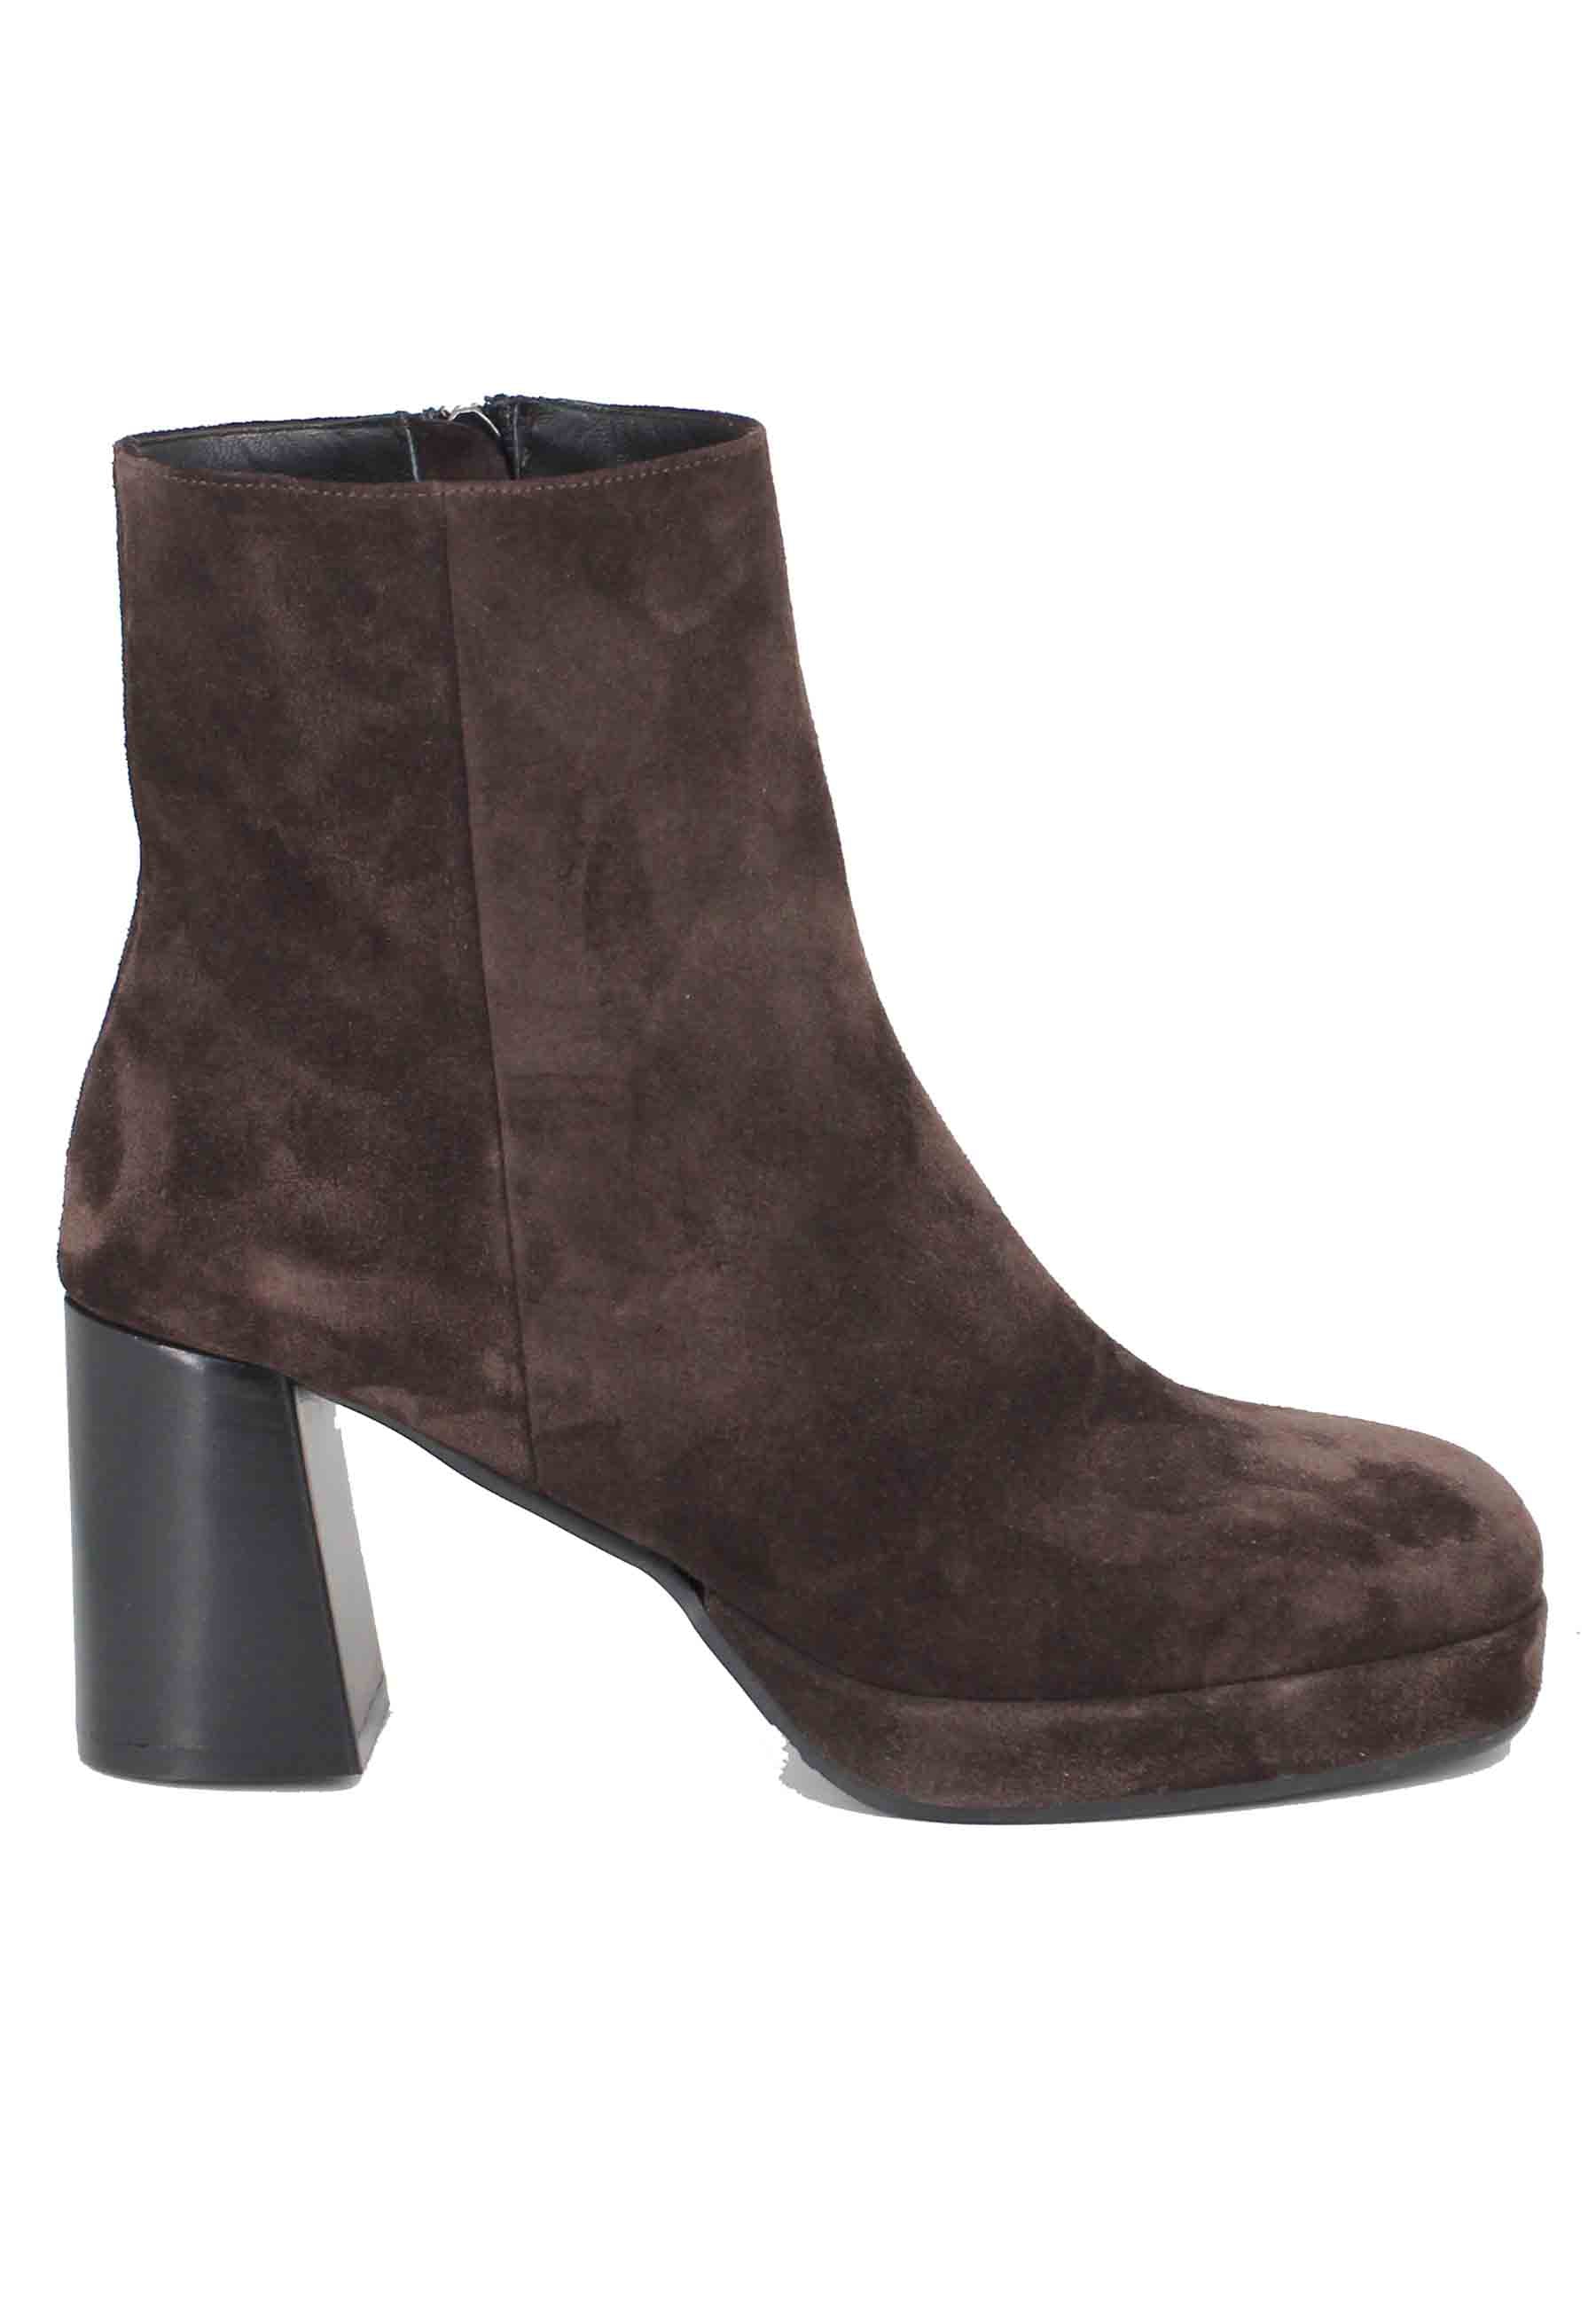 Women's high heel dark brown suede ankle boots